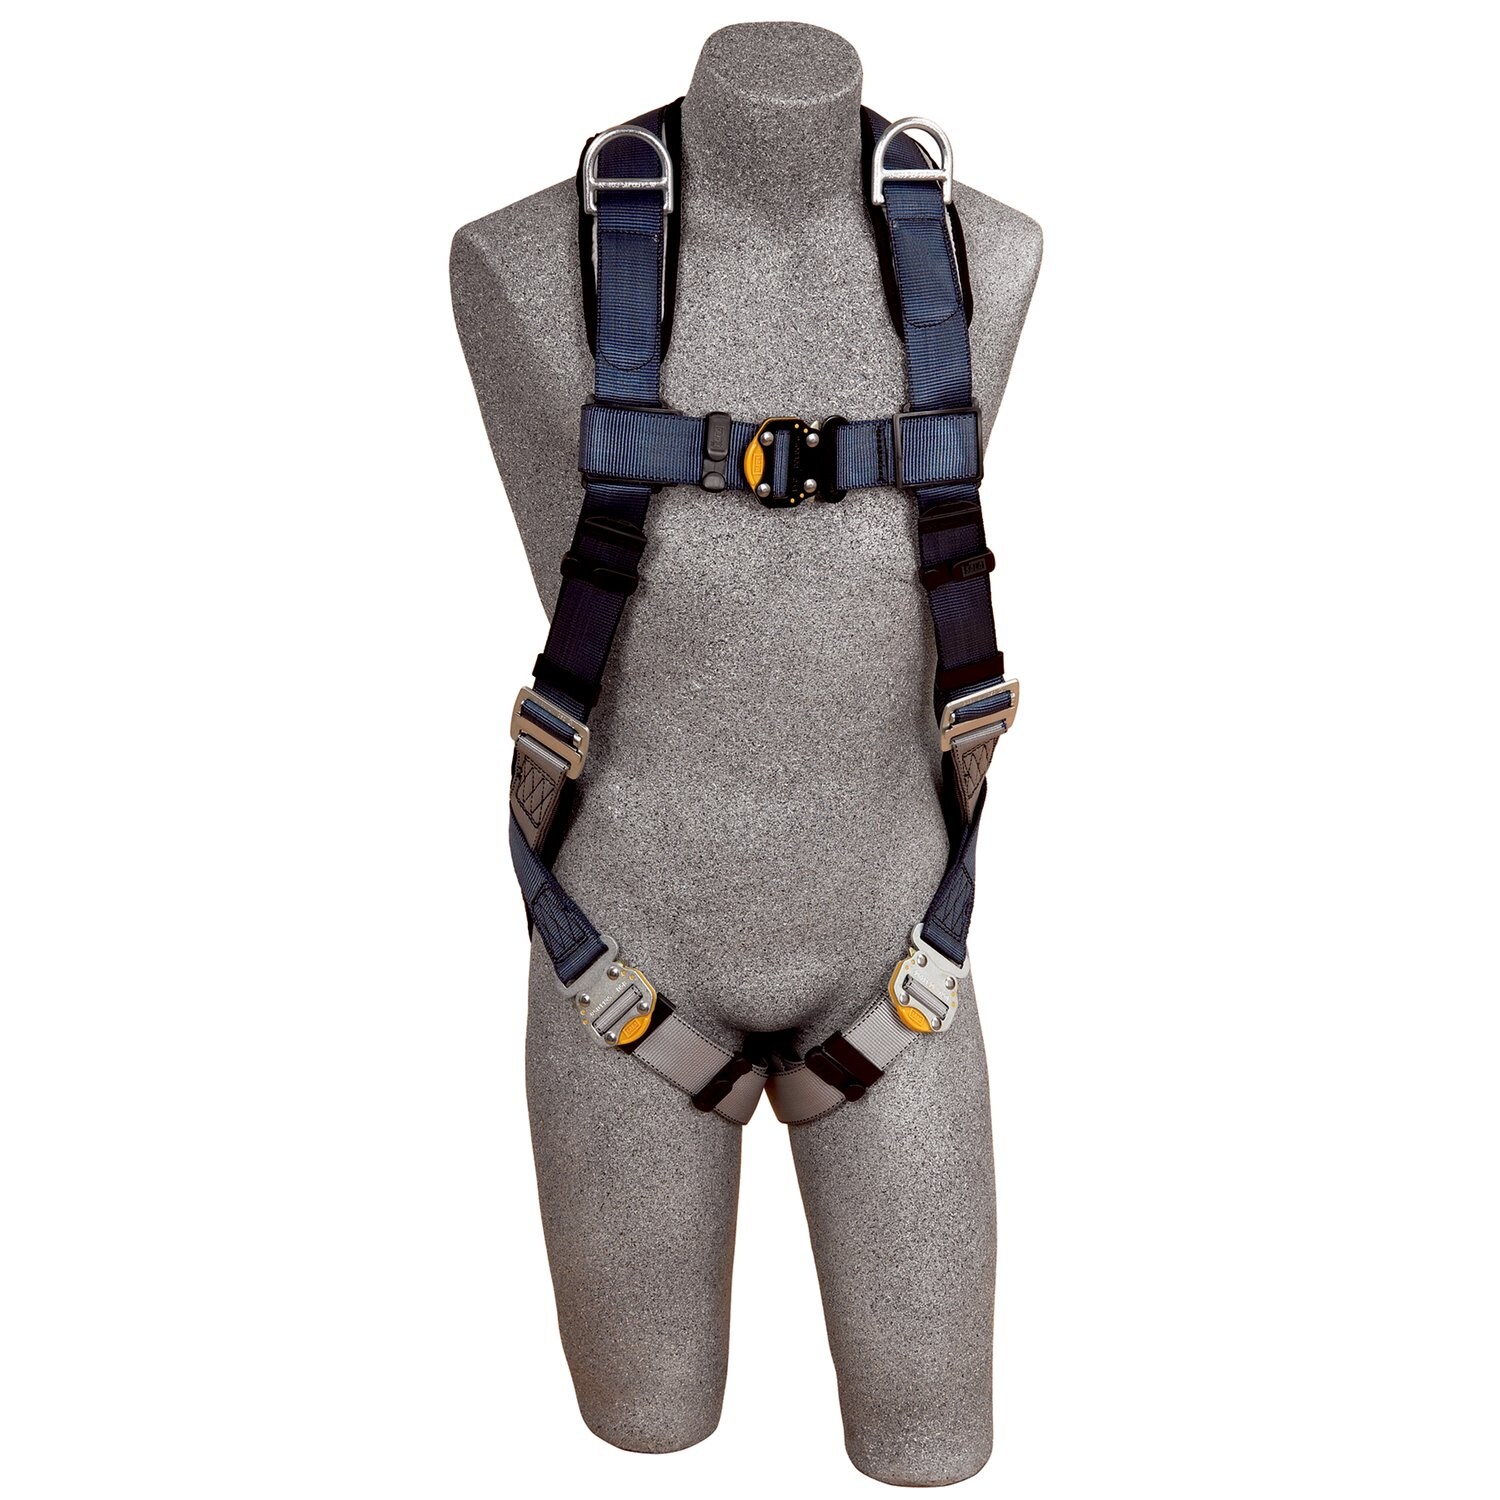 7012815670 - 3M DBI-SALA ExoFit Comfort Vest Retrieval Safety Harness 1108750, X-Small